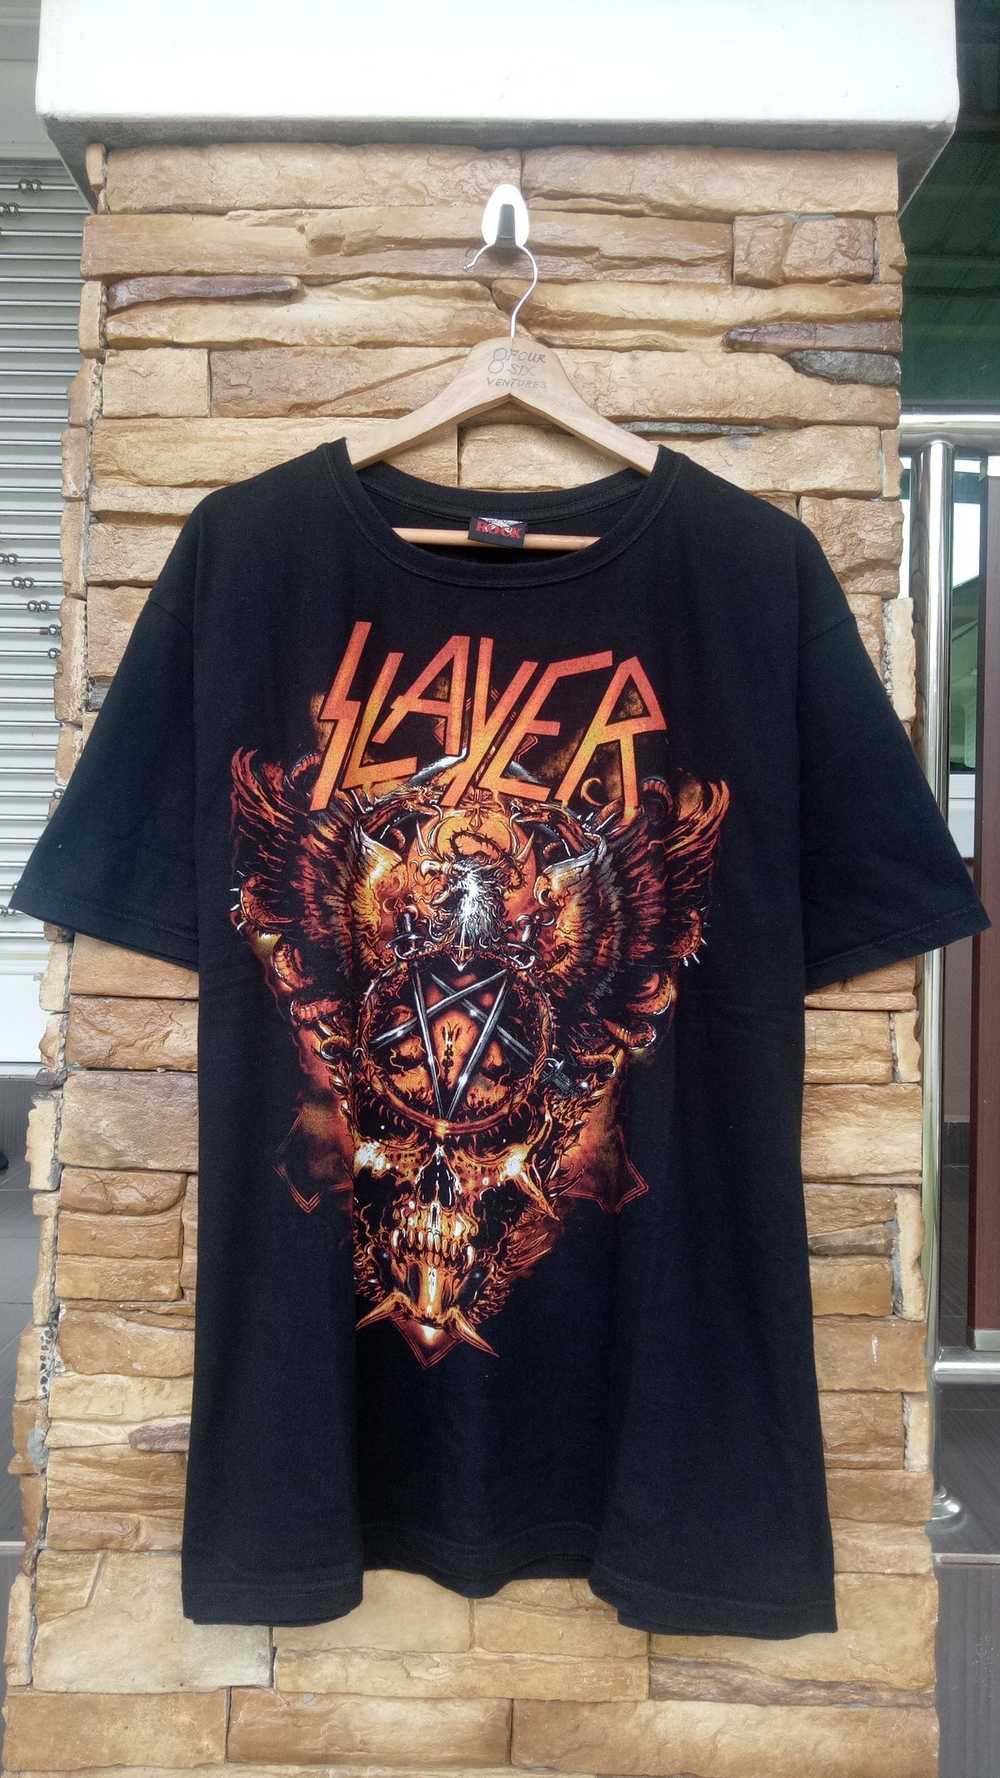 Band Tees × Slayer Slayer Band Tees - image 1